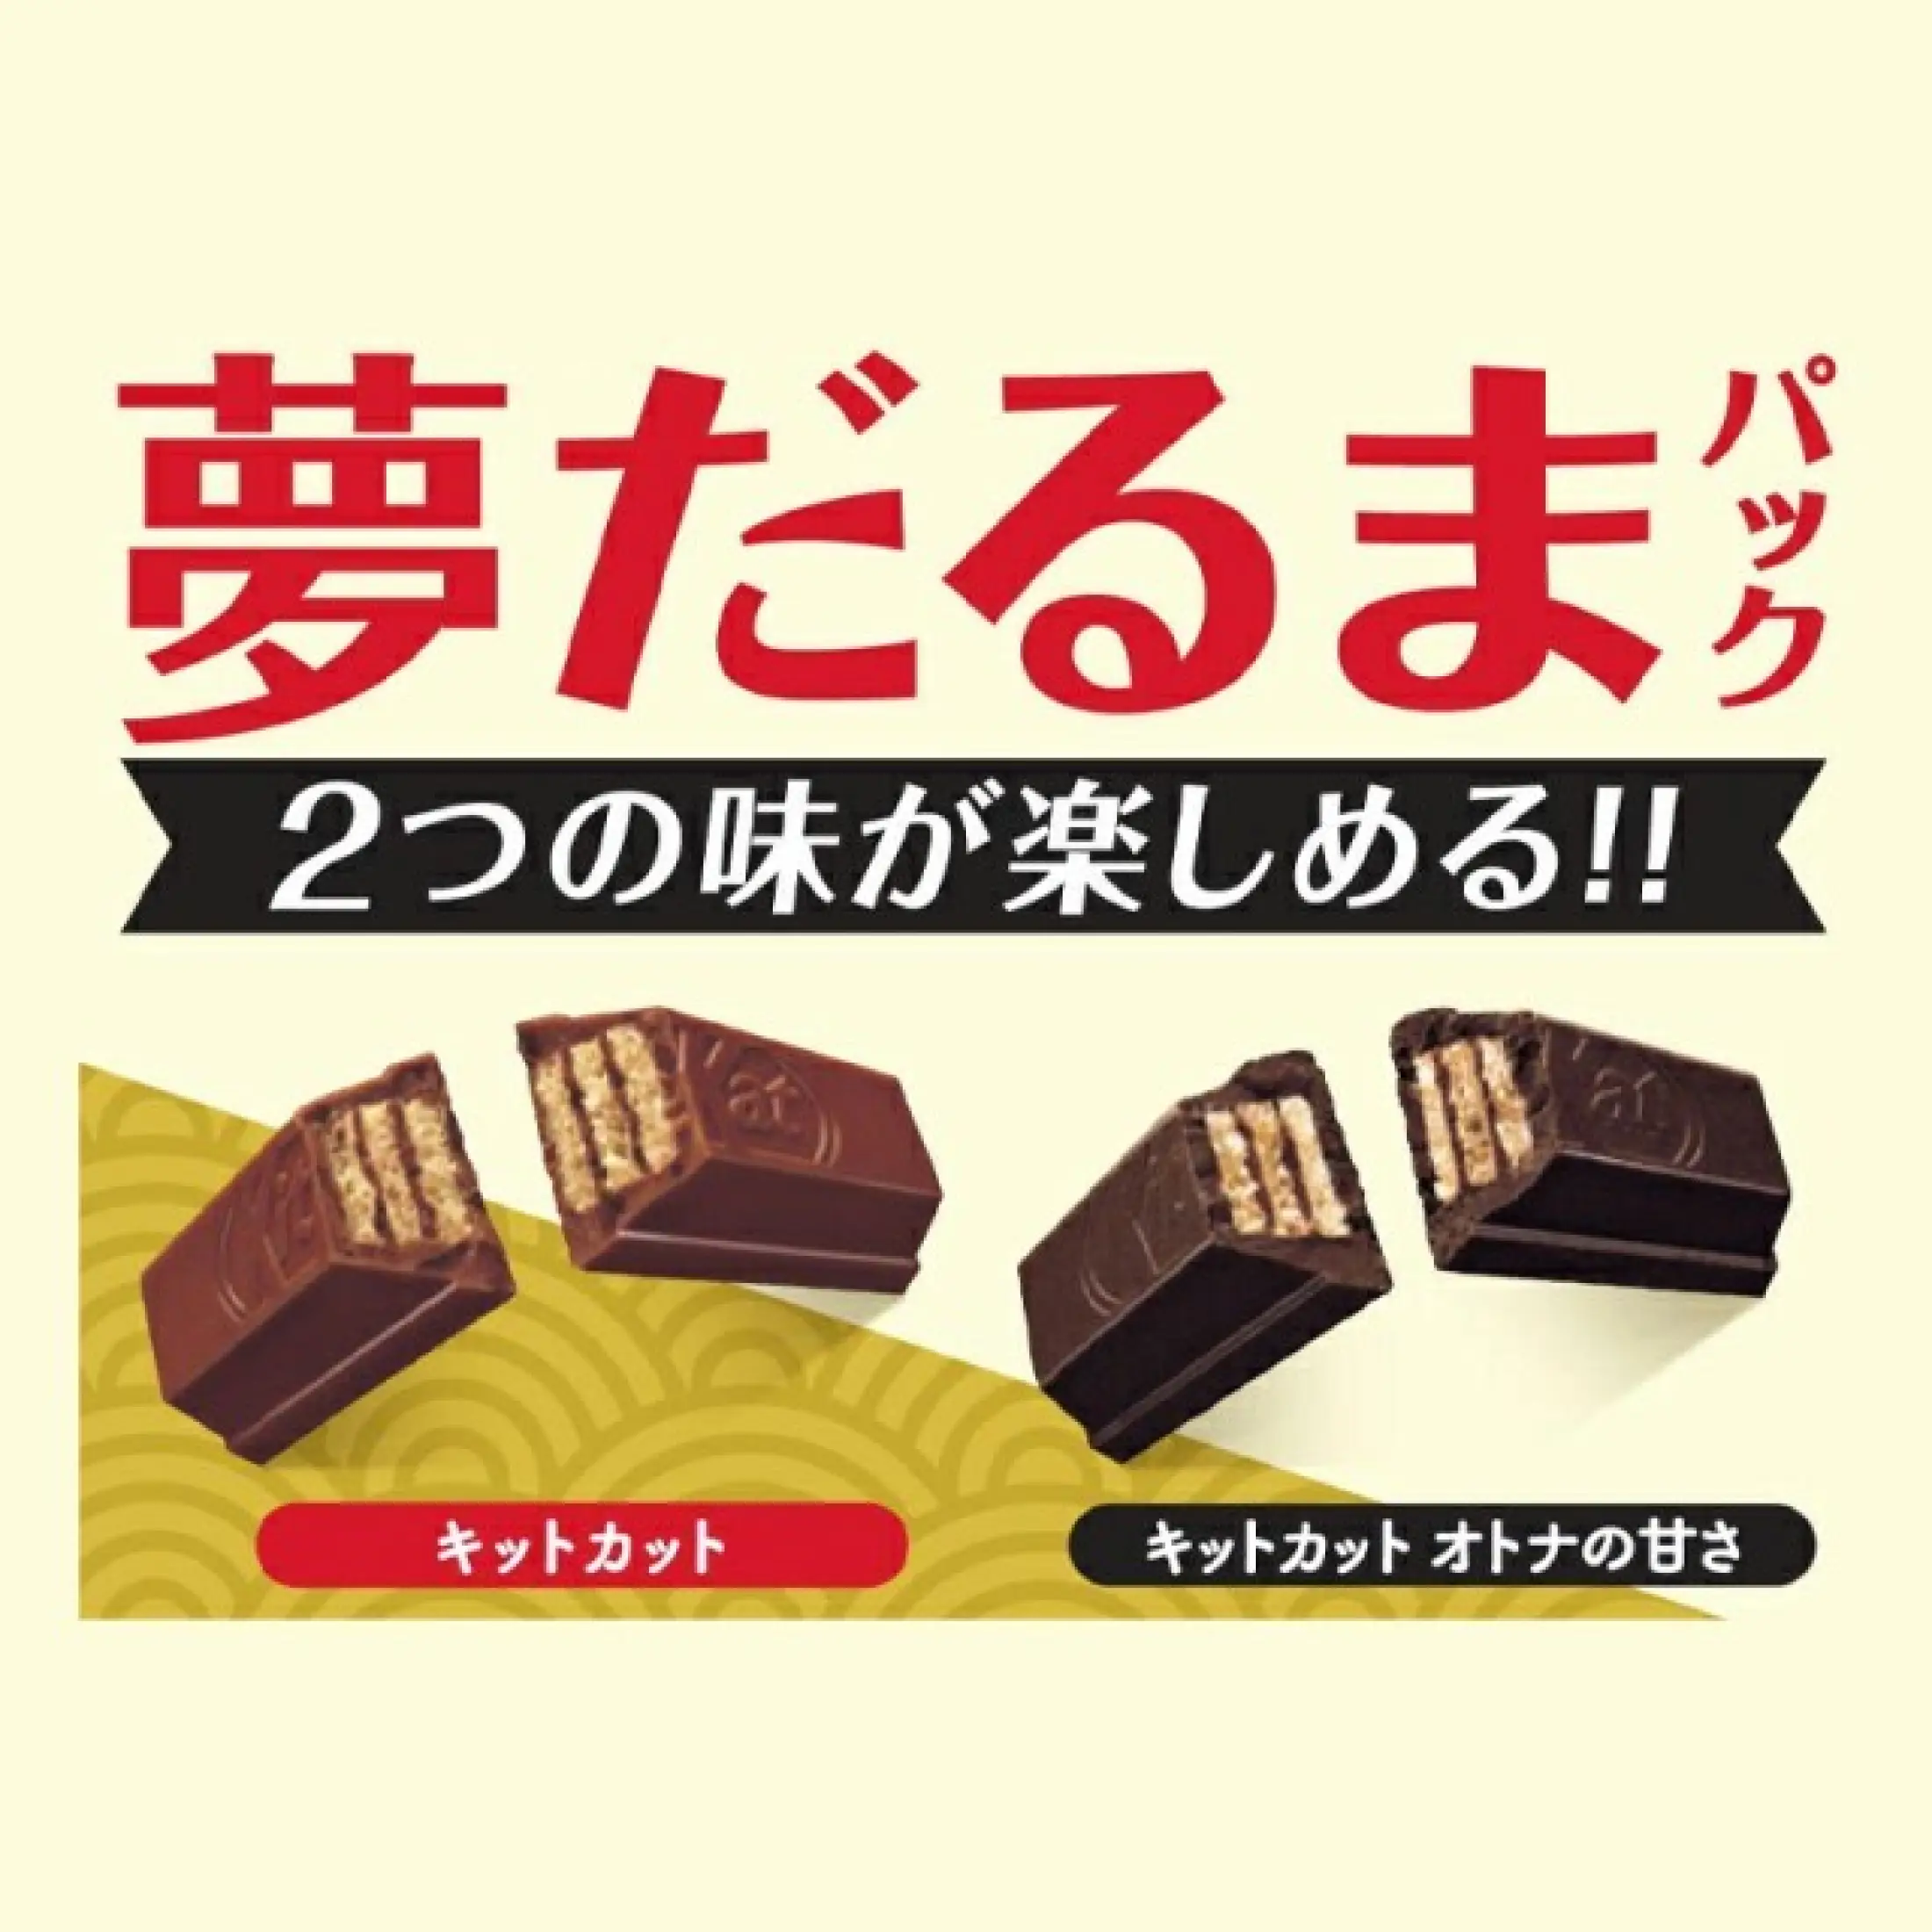 Kitkat Japan Chocolate Yume Daruma 12 Minis Lazada Ph